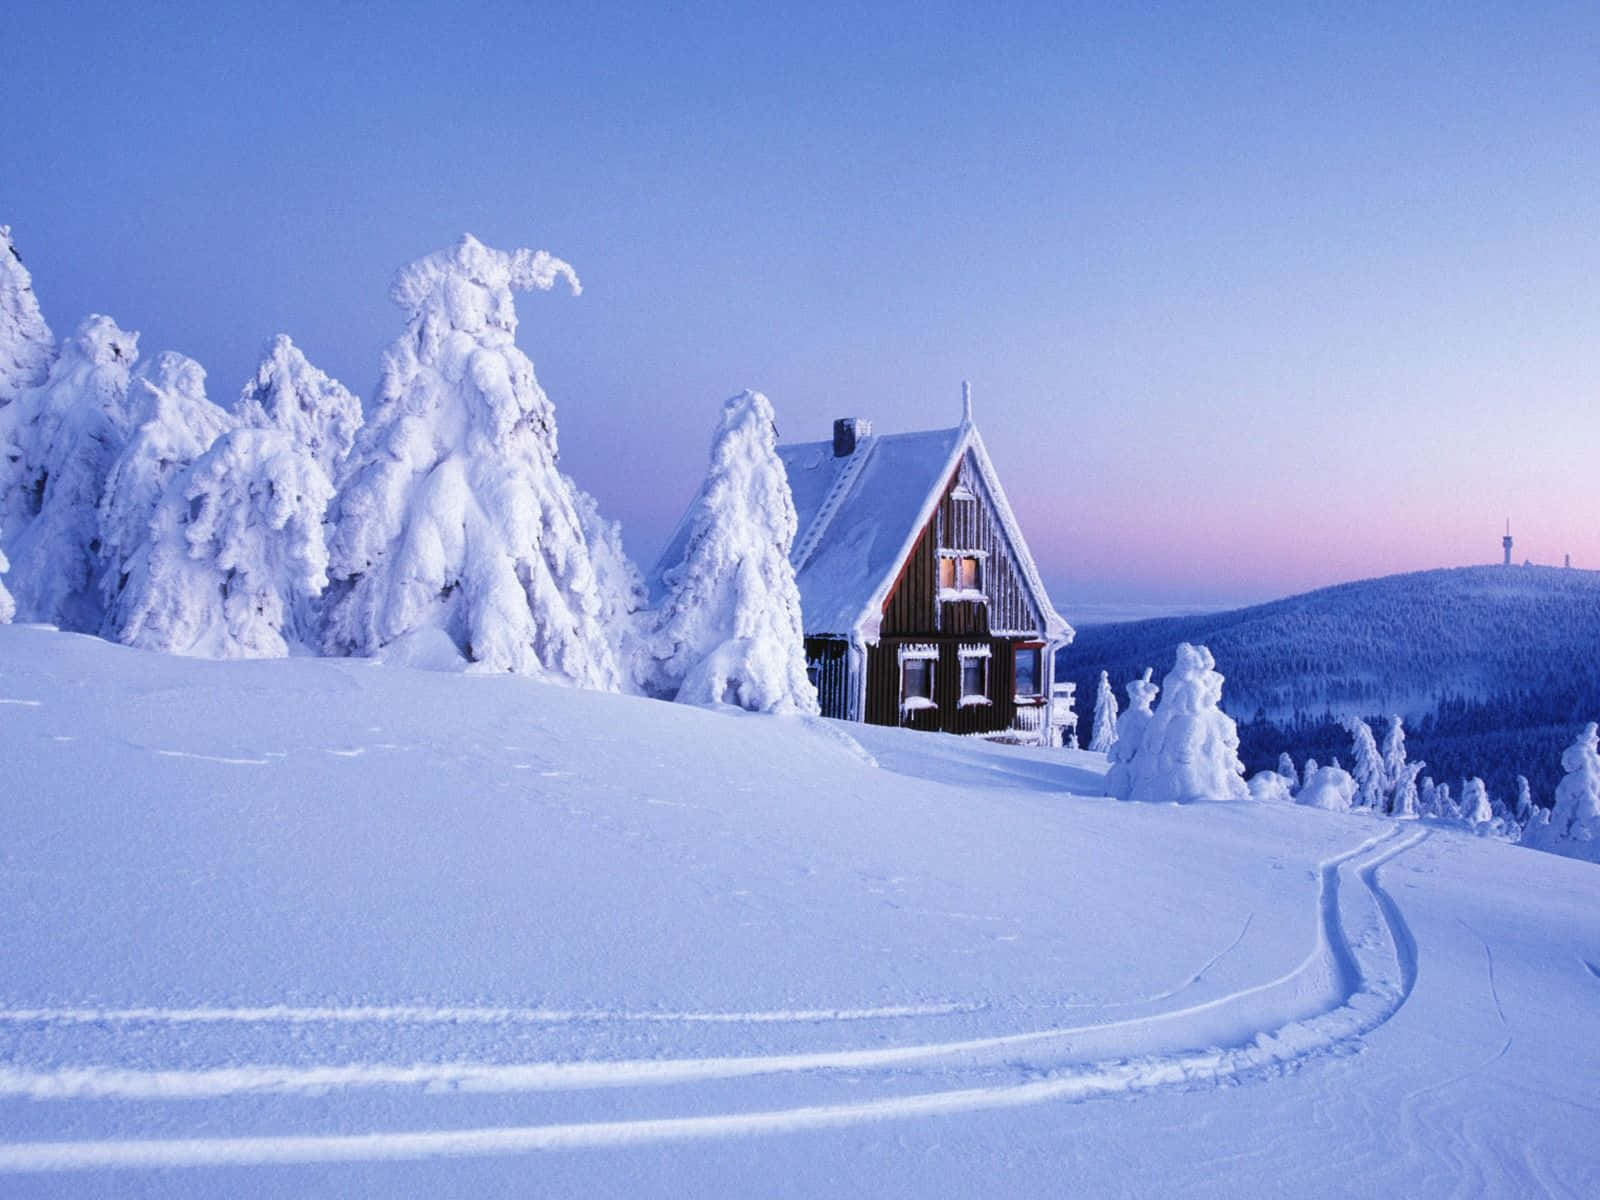 “Beautiful winter landscape”